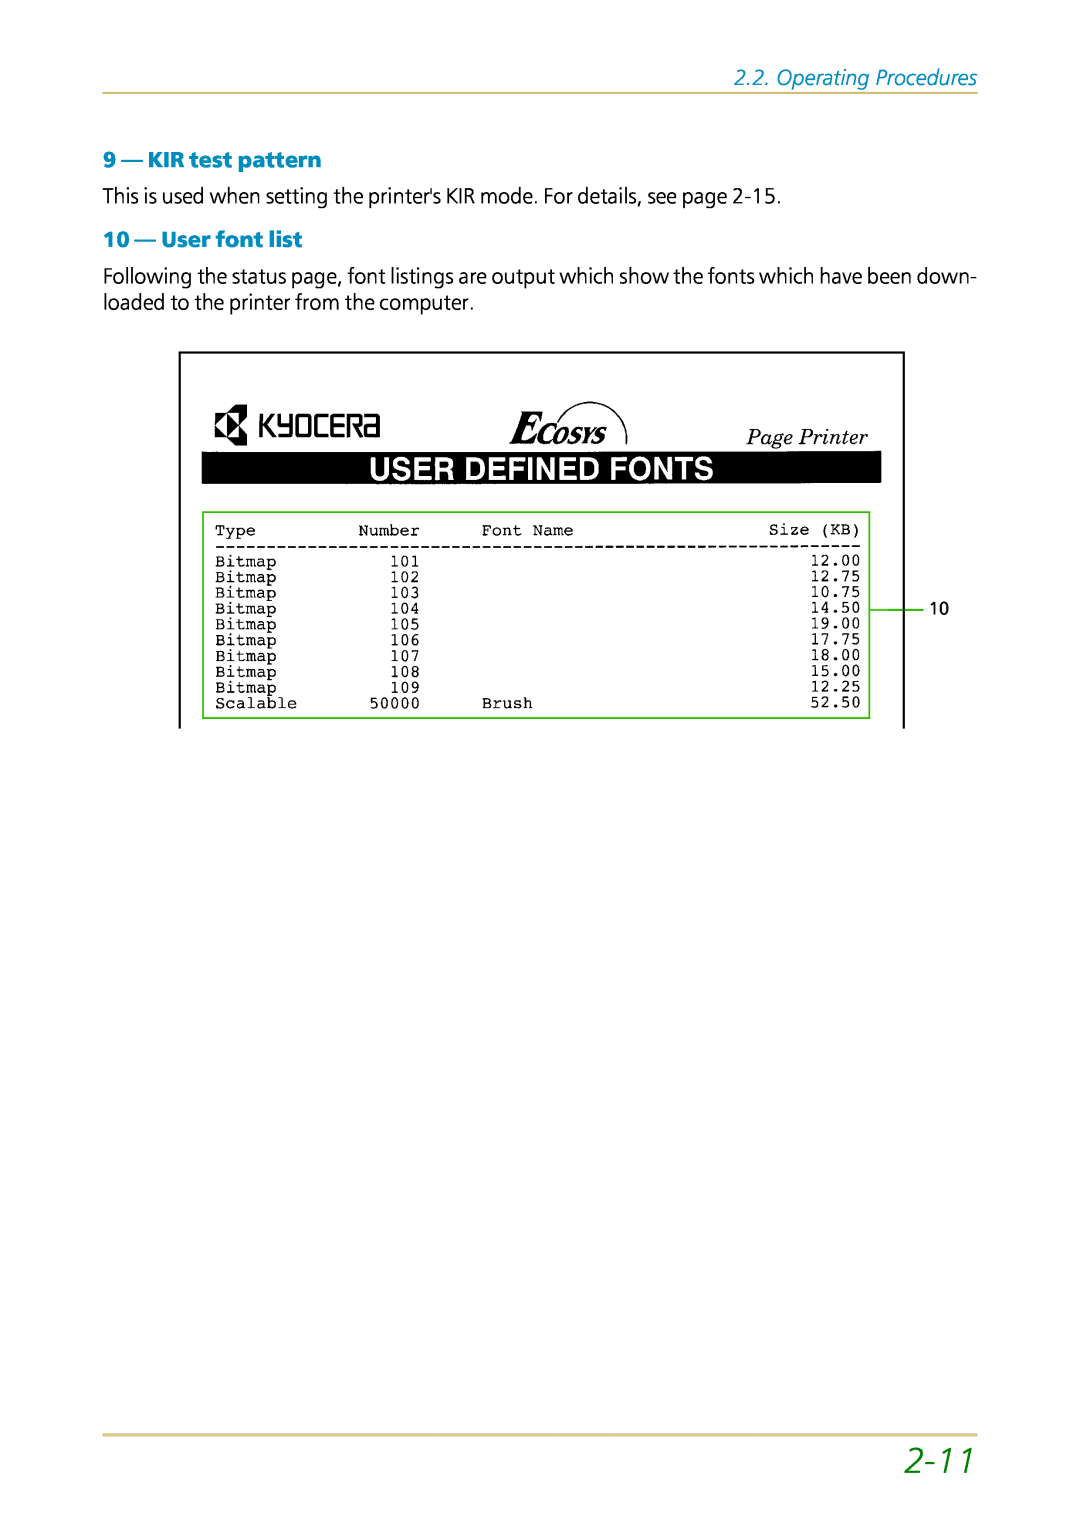 Kyocera FS-1700 user manual 2-11, Operating Procedures, KIR test pattern, User font list 